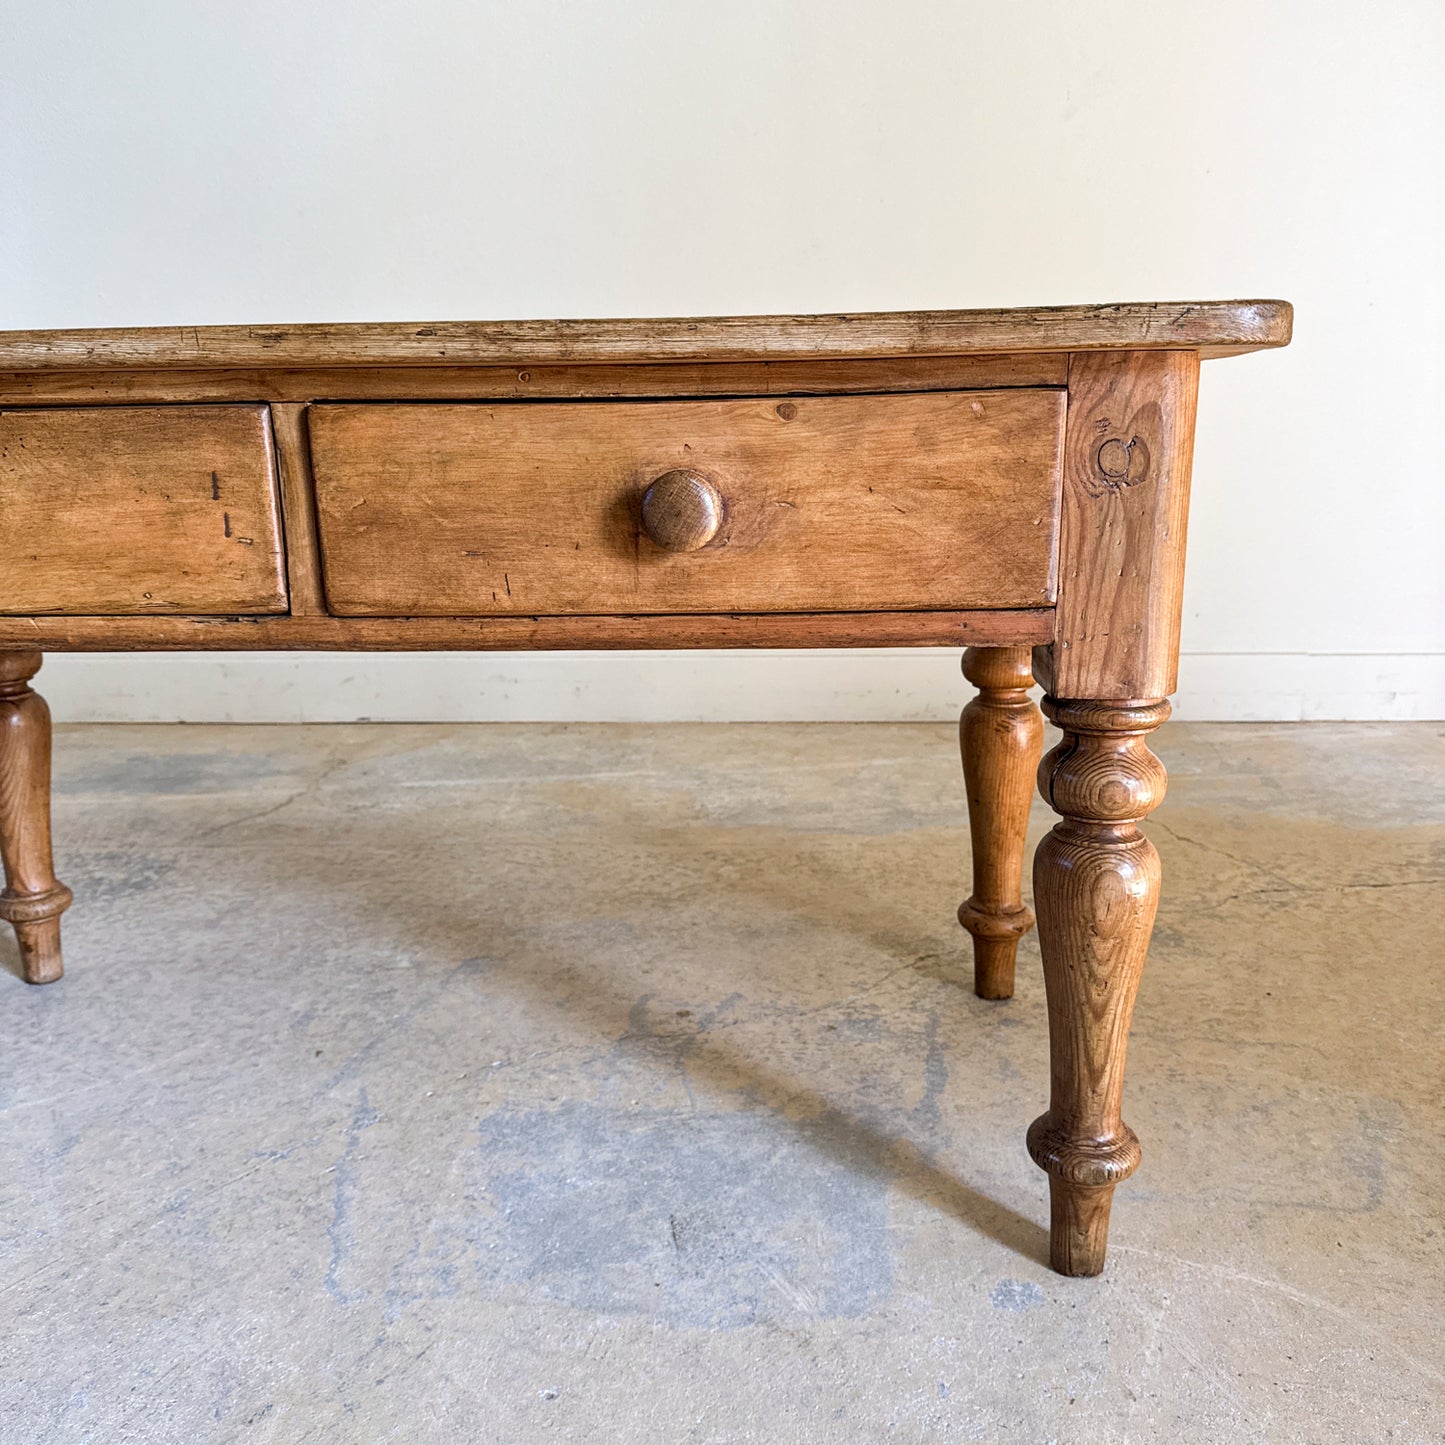 Antique English Pine 2 Drawer Table